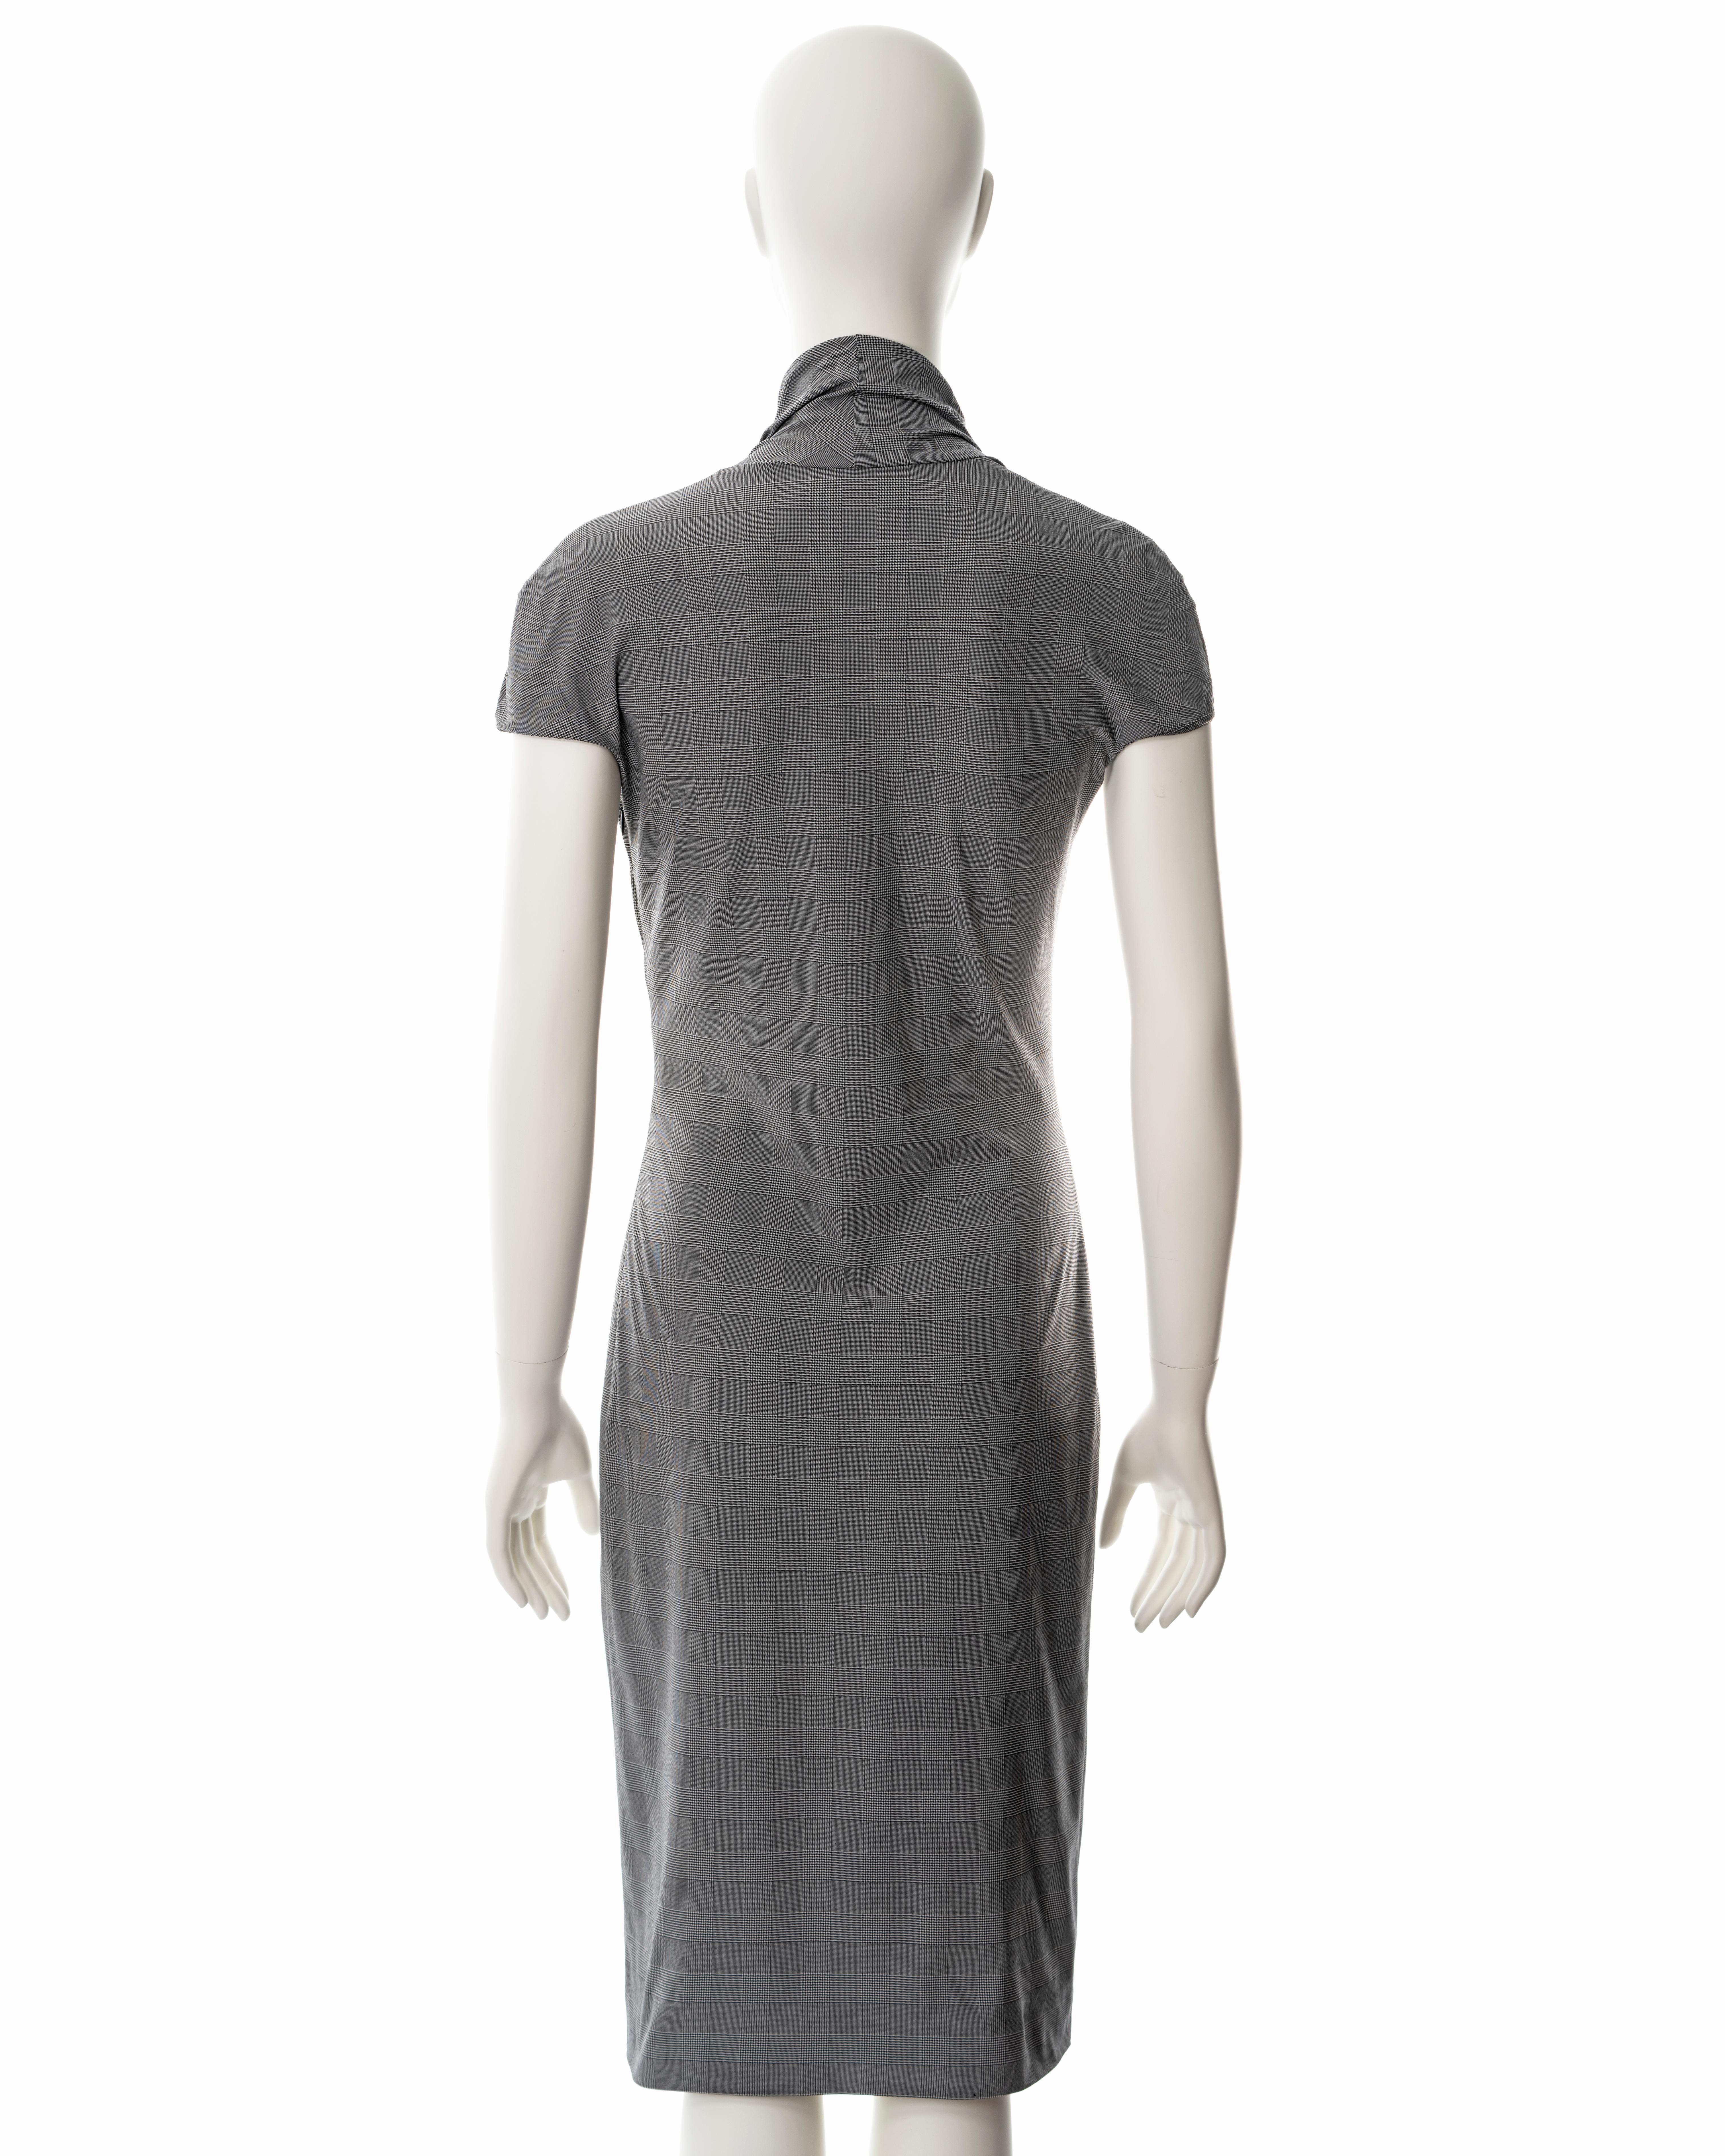 Christian Dior by John Galliano grey checked nylon sheath dress, ss 2000 For Sale 3